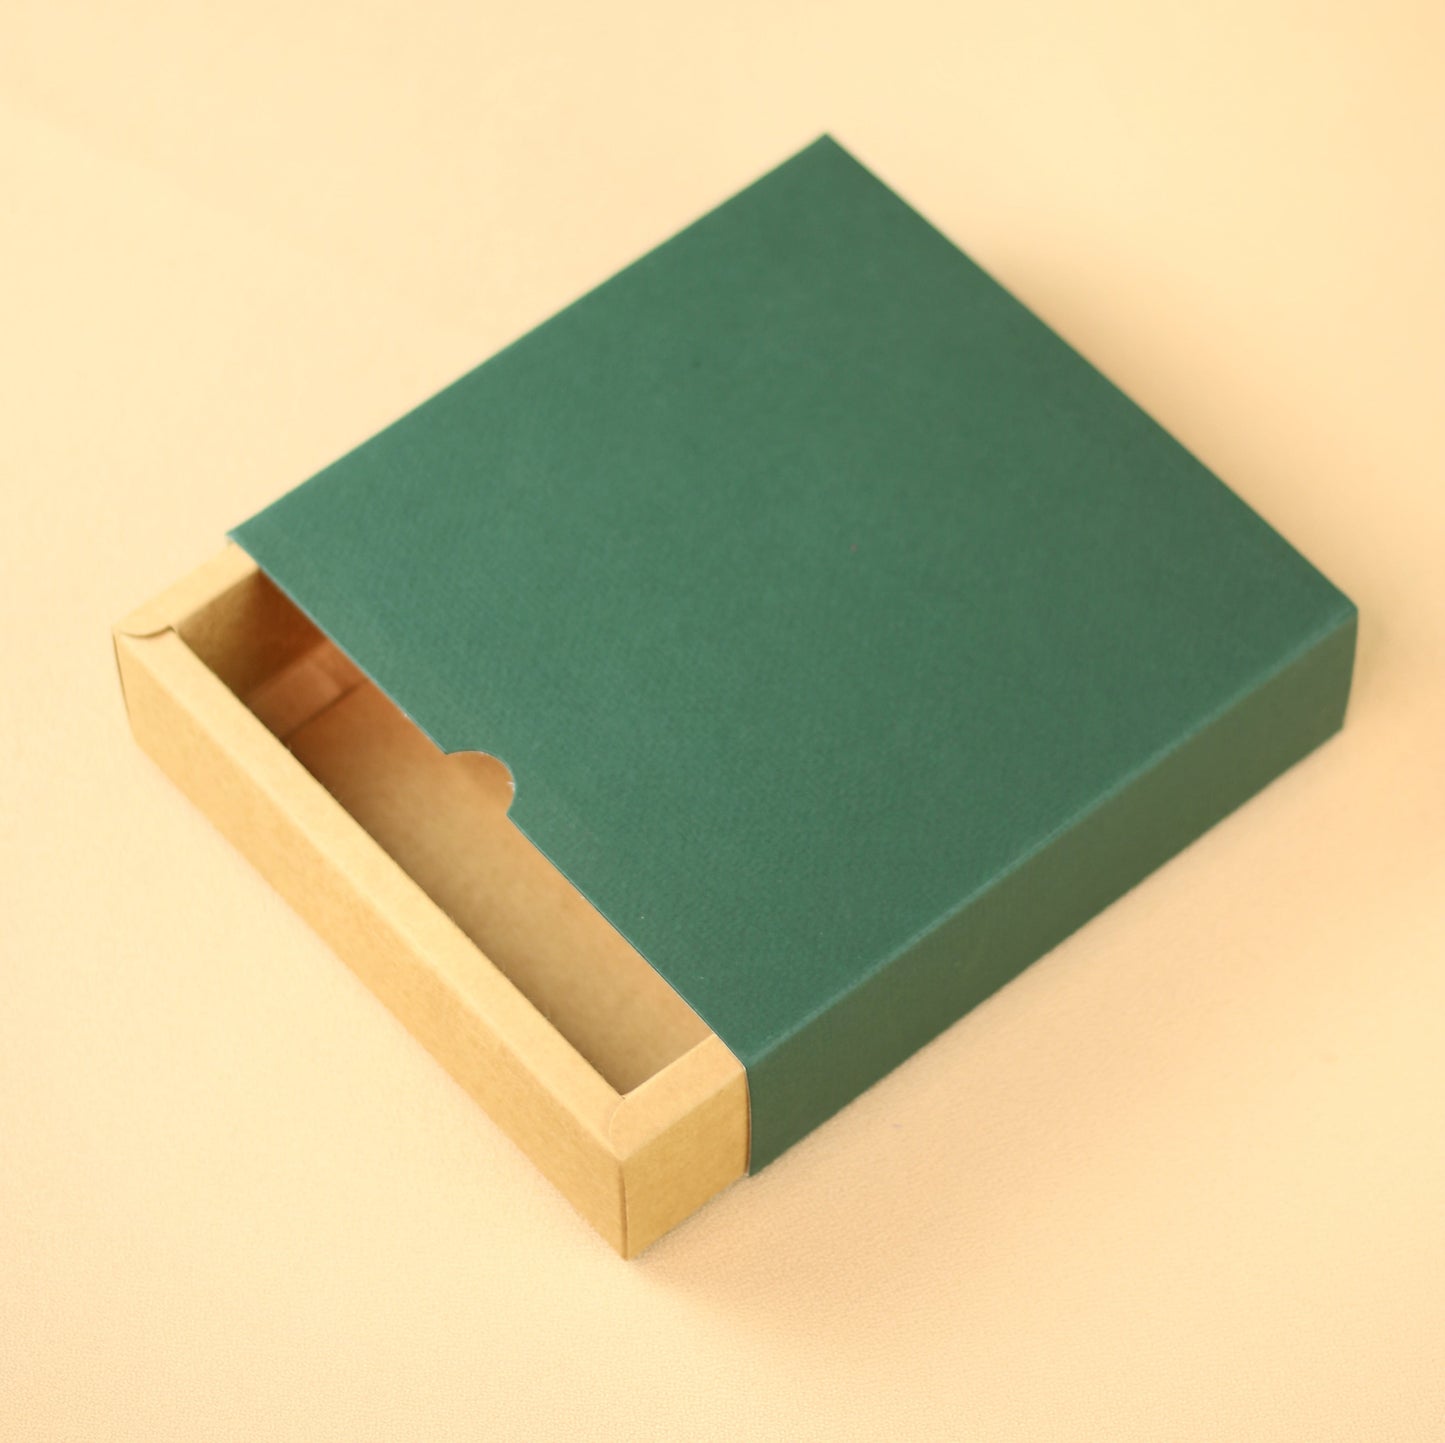 FESTIVE SLIDE BOX (6 X 6 X 2)